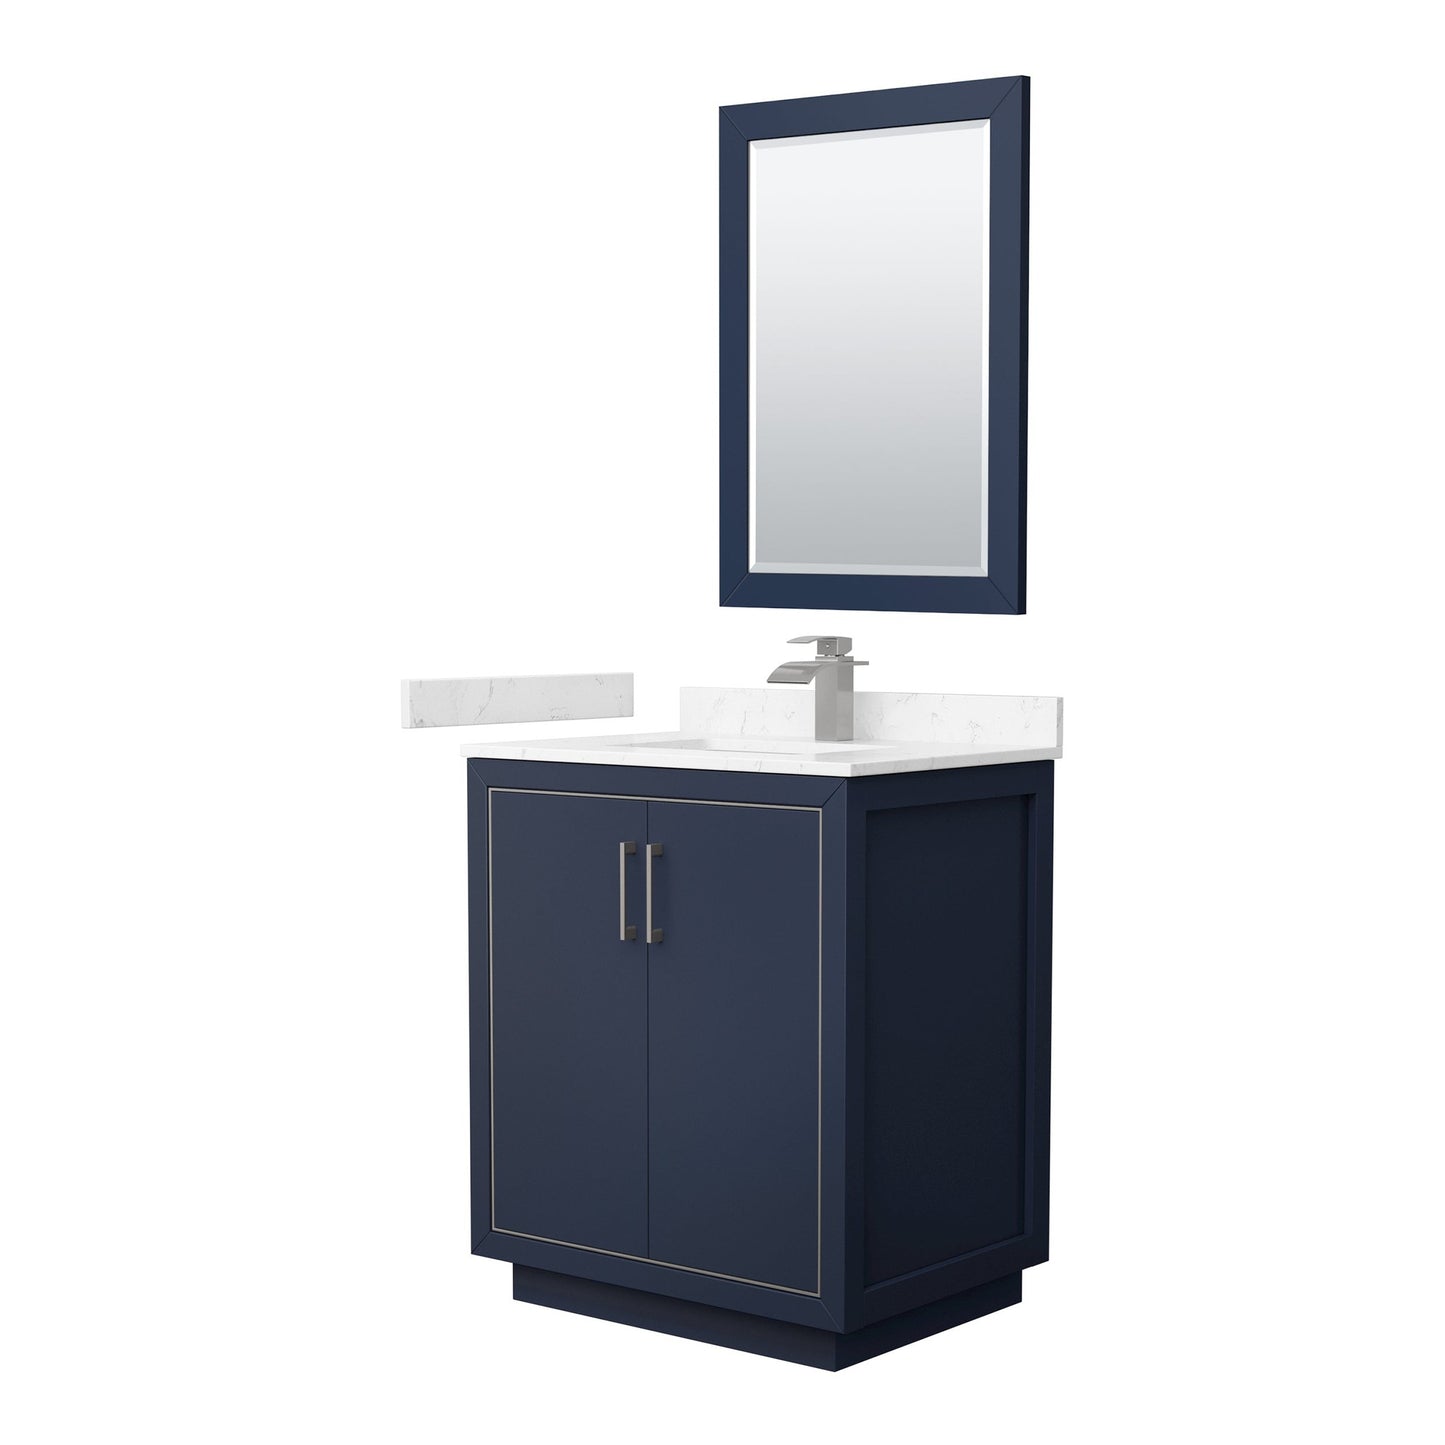 Wyndham Collection Icon 30" Single Bathroom Vanity in Dark Blue, Carrara Cultured Marble Countertop, Undermount Square Sink, Brushed Nickel Trim, 24" Mirror